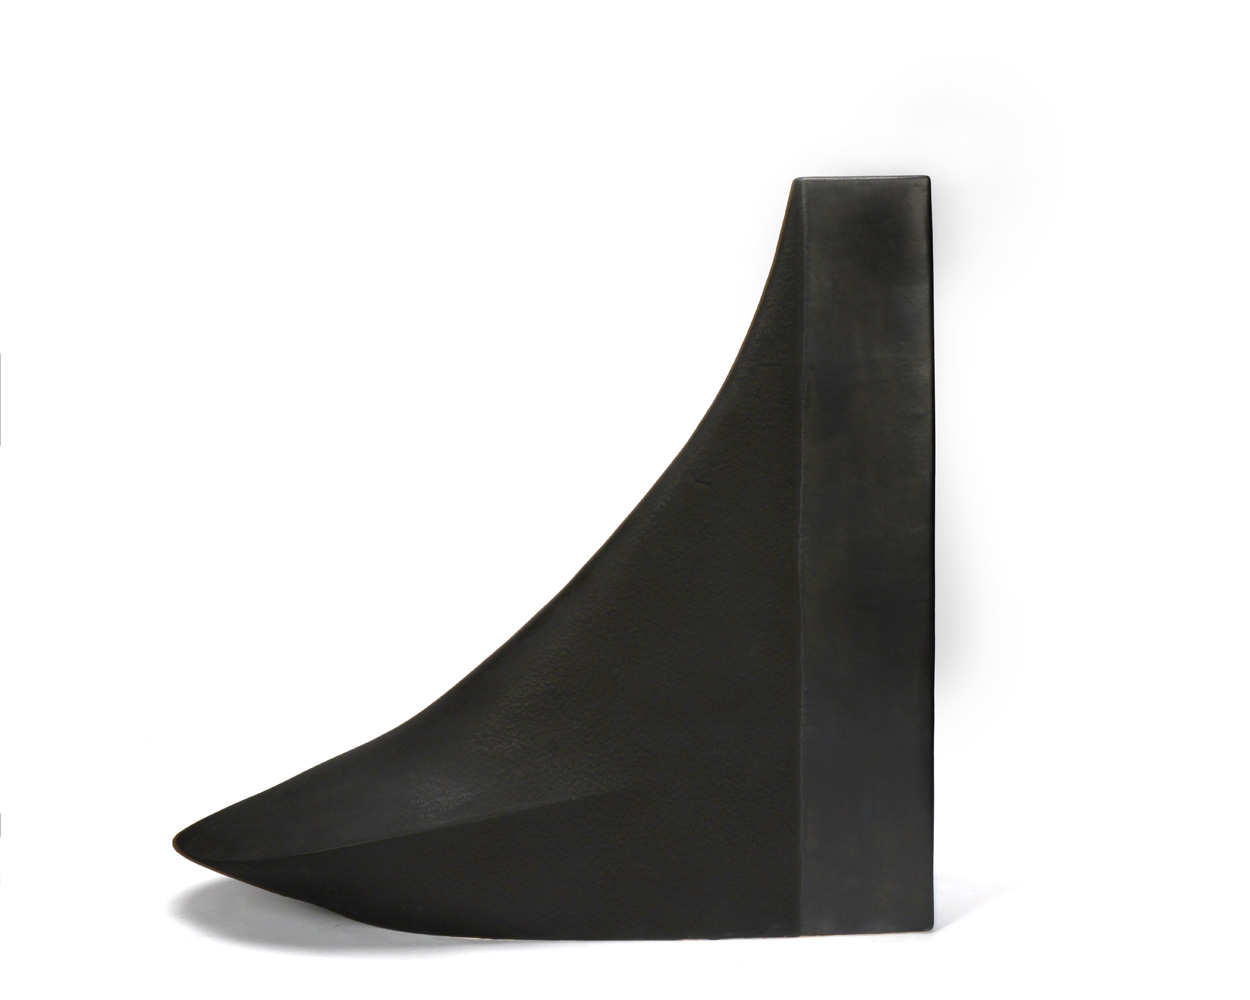 
		                					James Marshall 		                																	
																											<i>Untitled Black #505,</i>  
																																																					ceramic, 
																																								32 x 34 x 11 inches  
																								
		                				